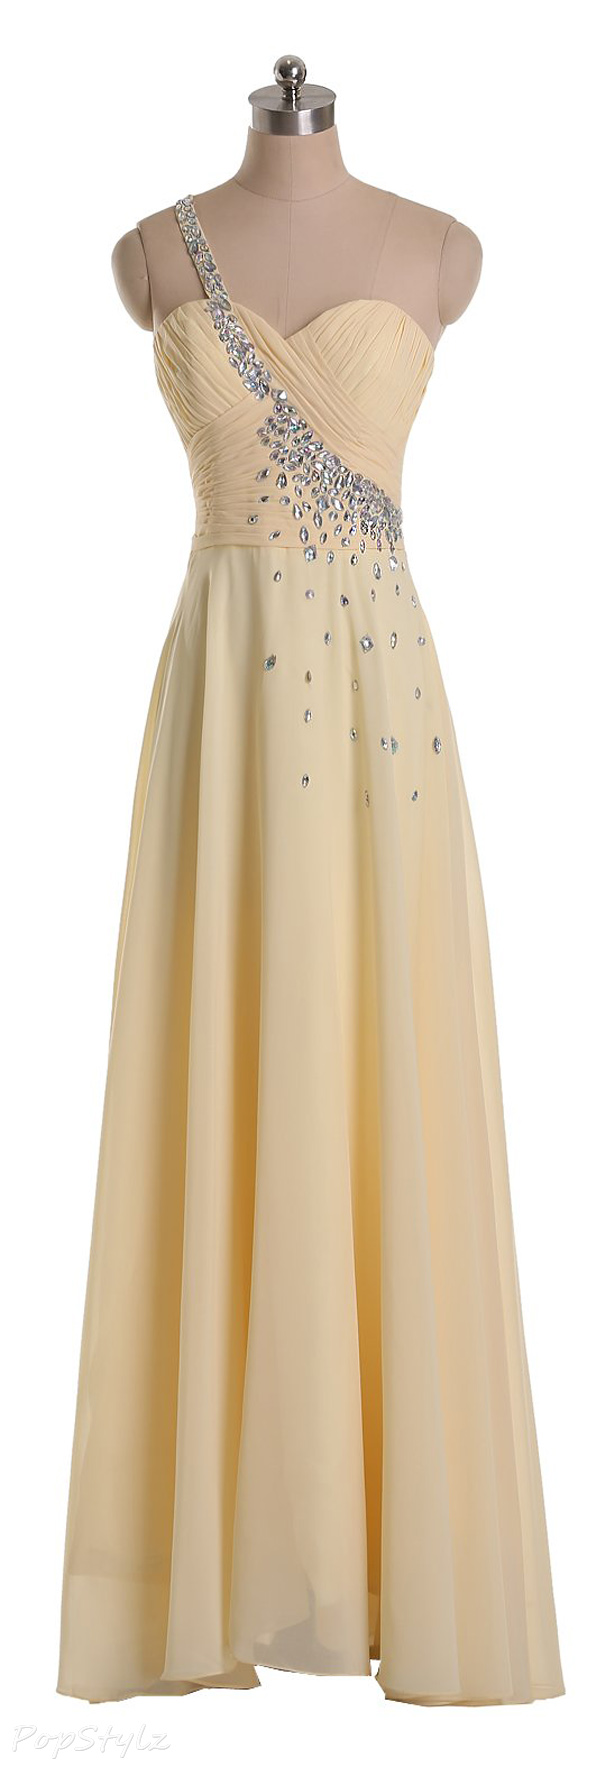 Sunvary 2015 Rhinestone One Shoulder Chiffon Evening Gown